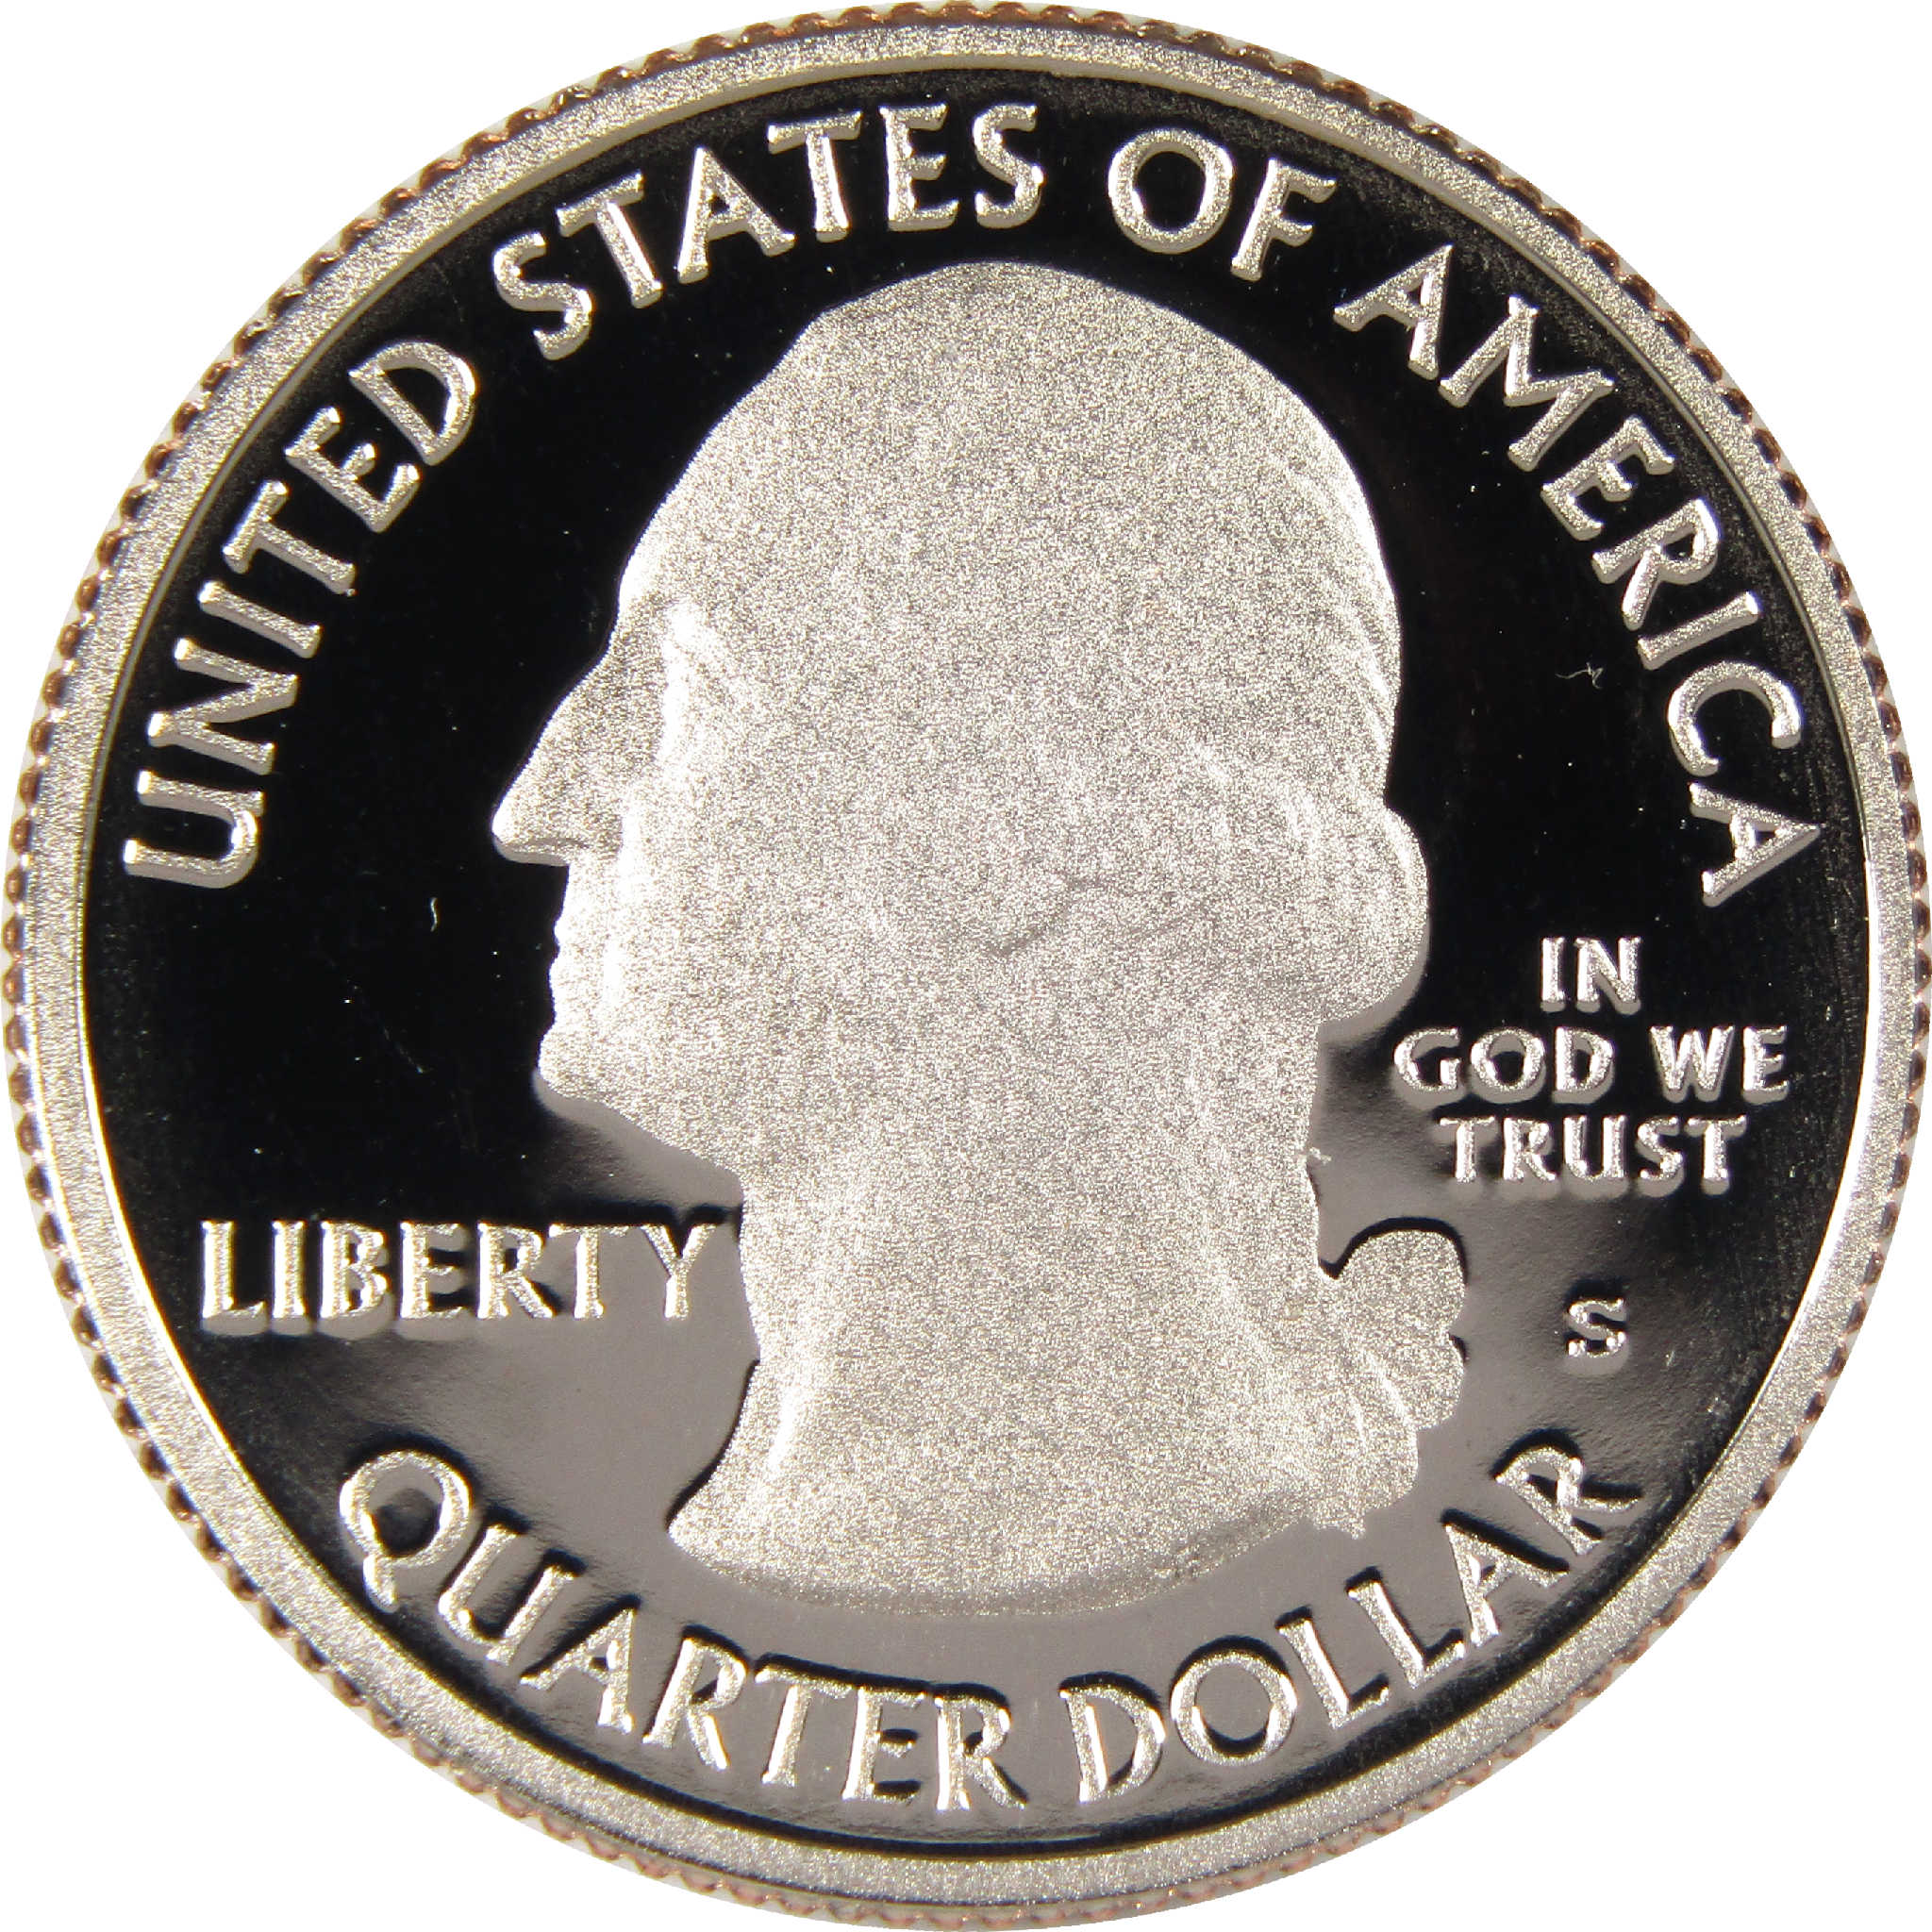 2010 S Mount Hood National Park Quarter Clad 25c Proof Coin